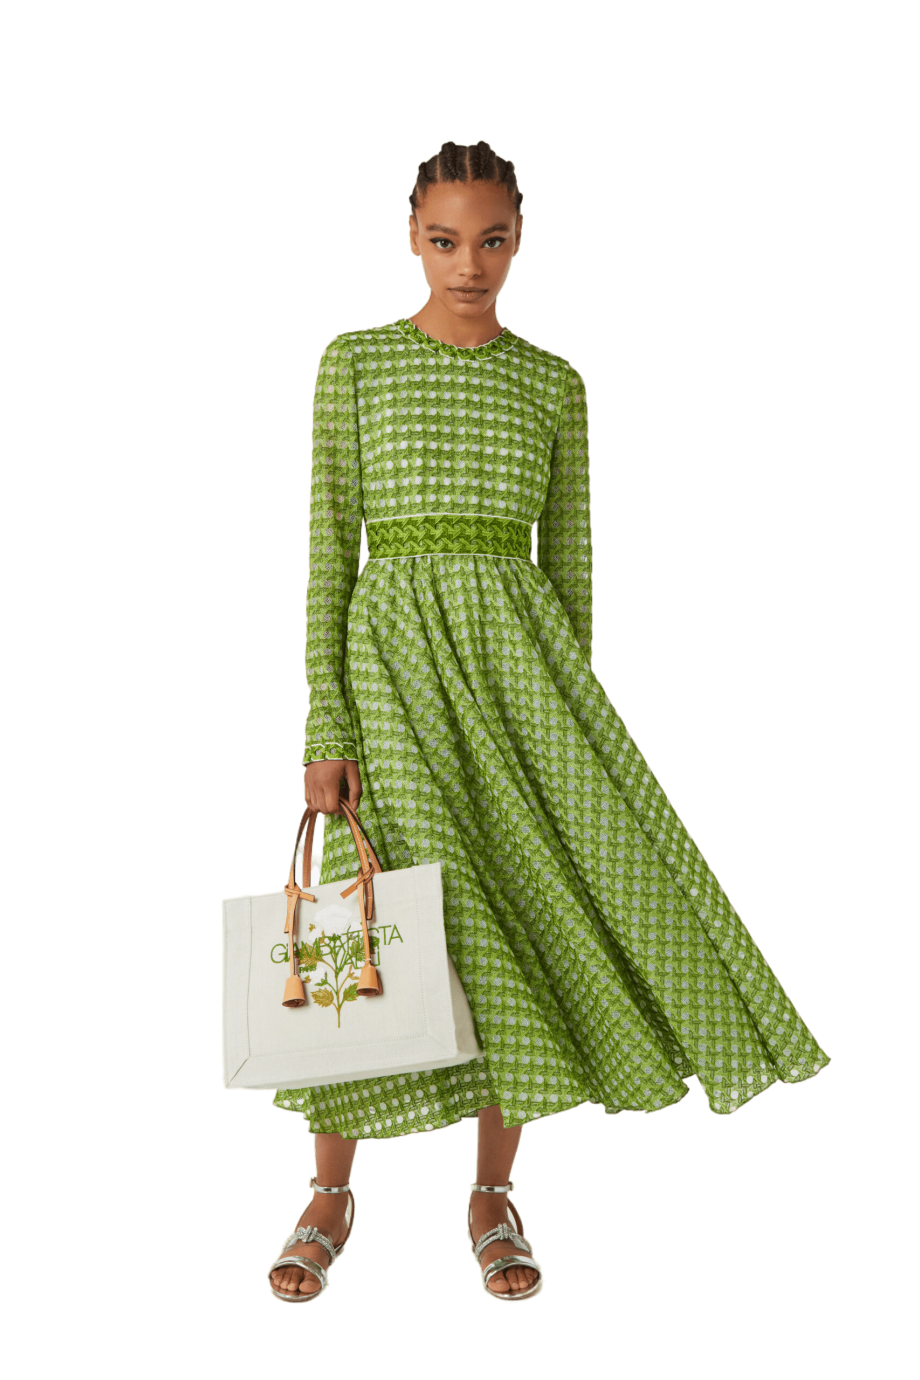  Green Macramé and tulle midi dress 